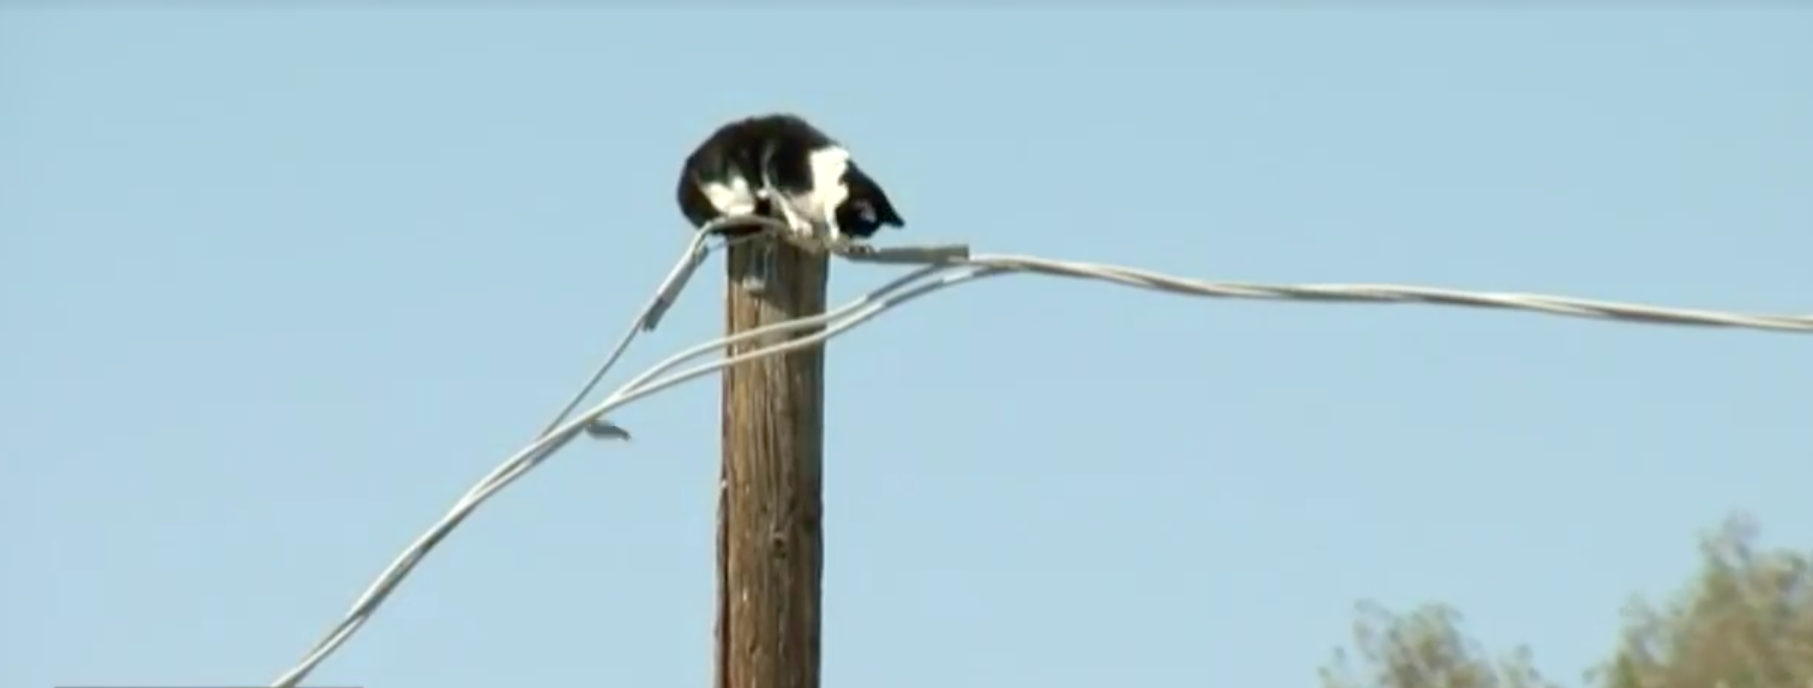 Arizona cat stuck on pole.